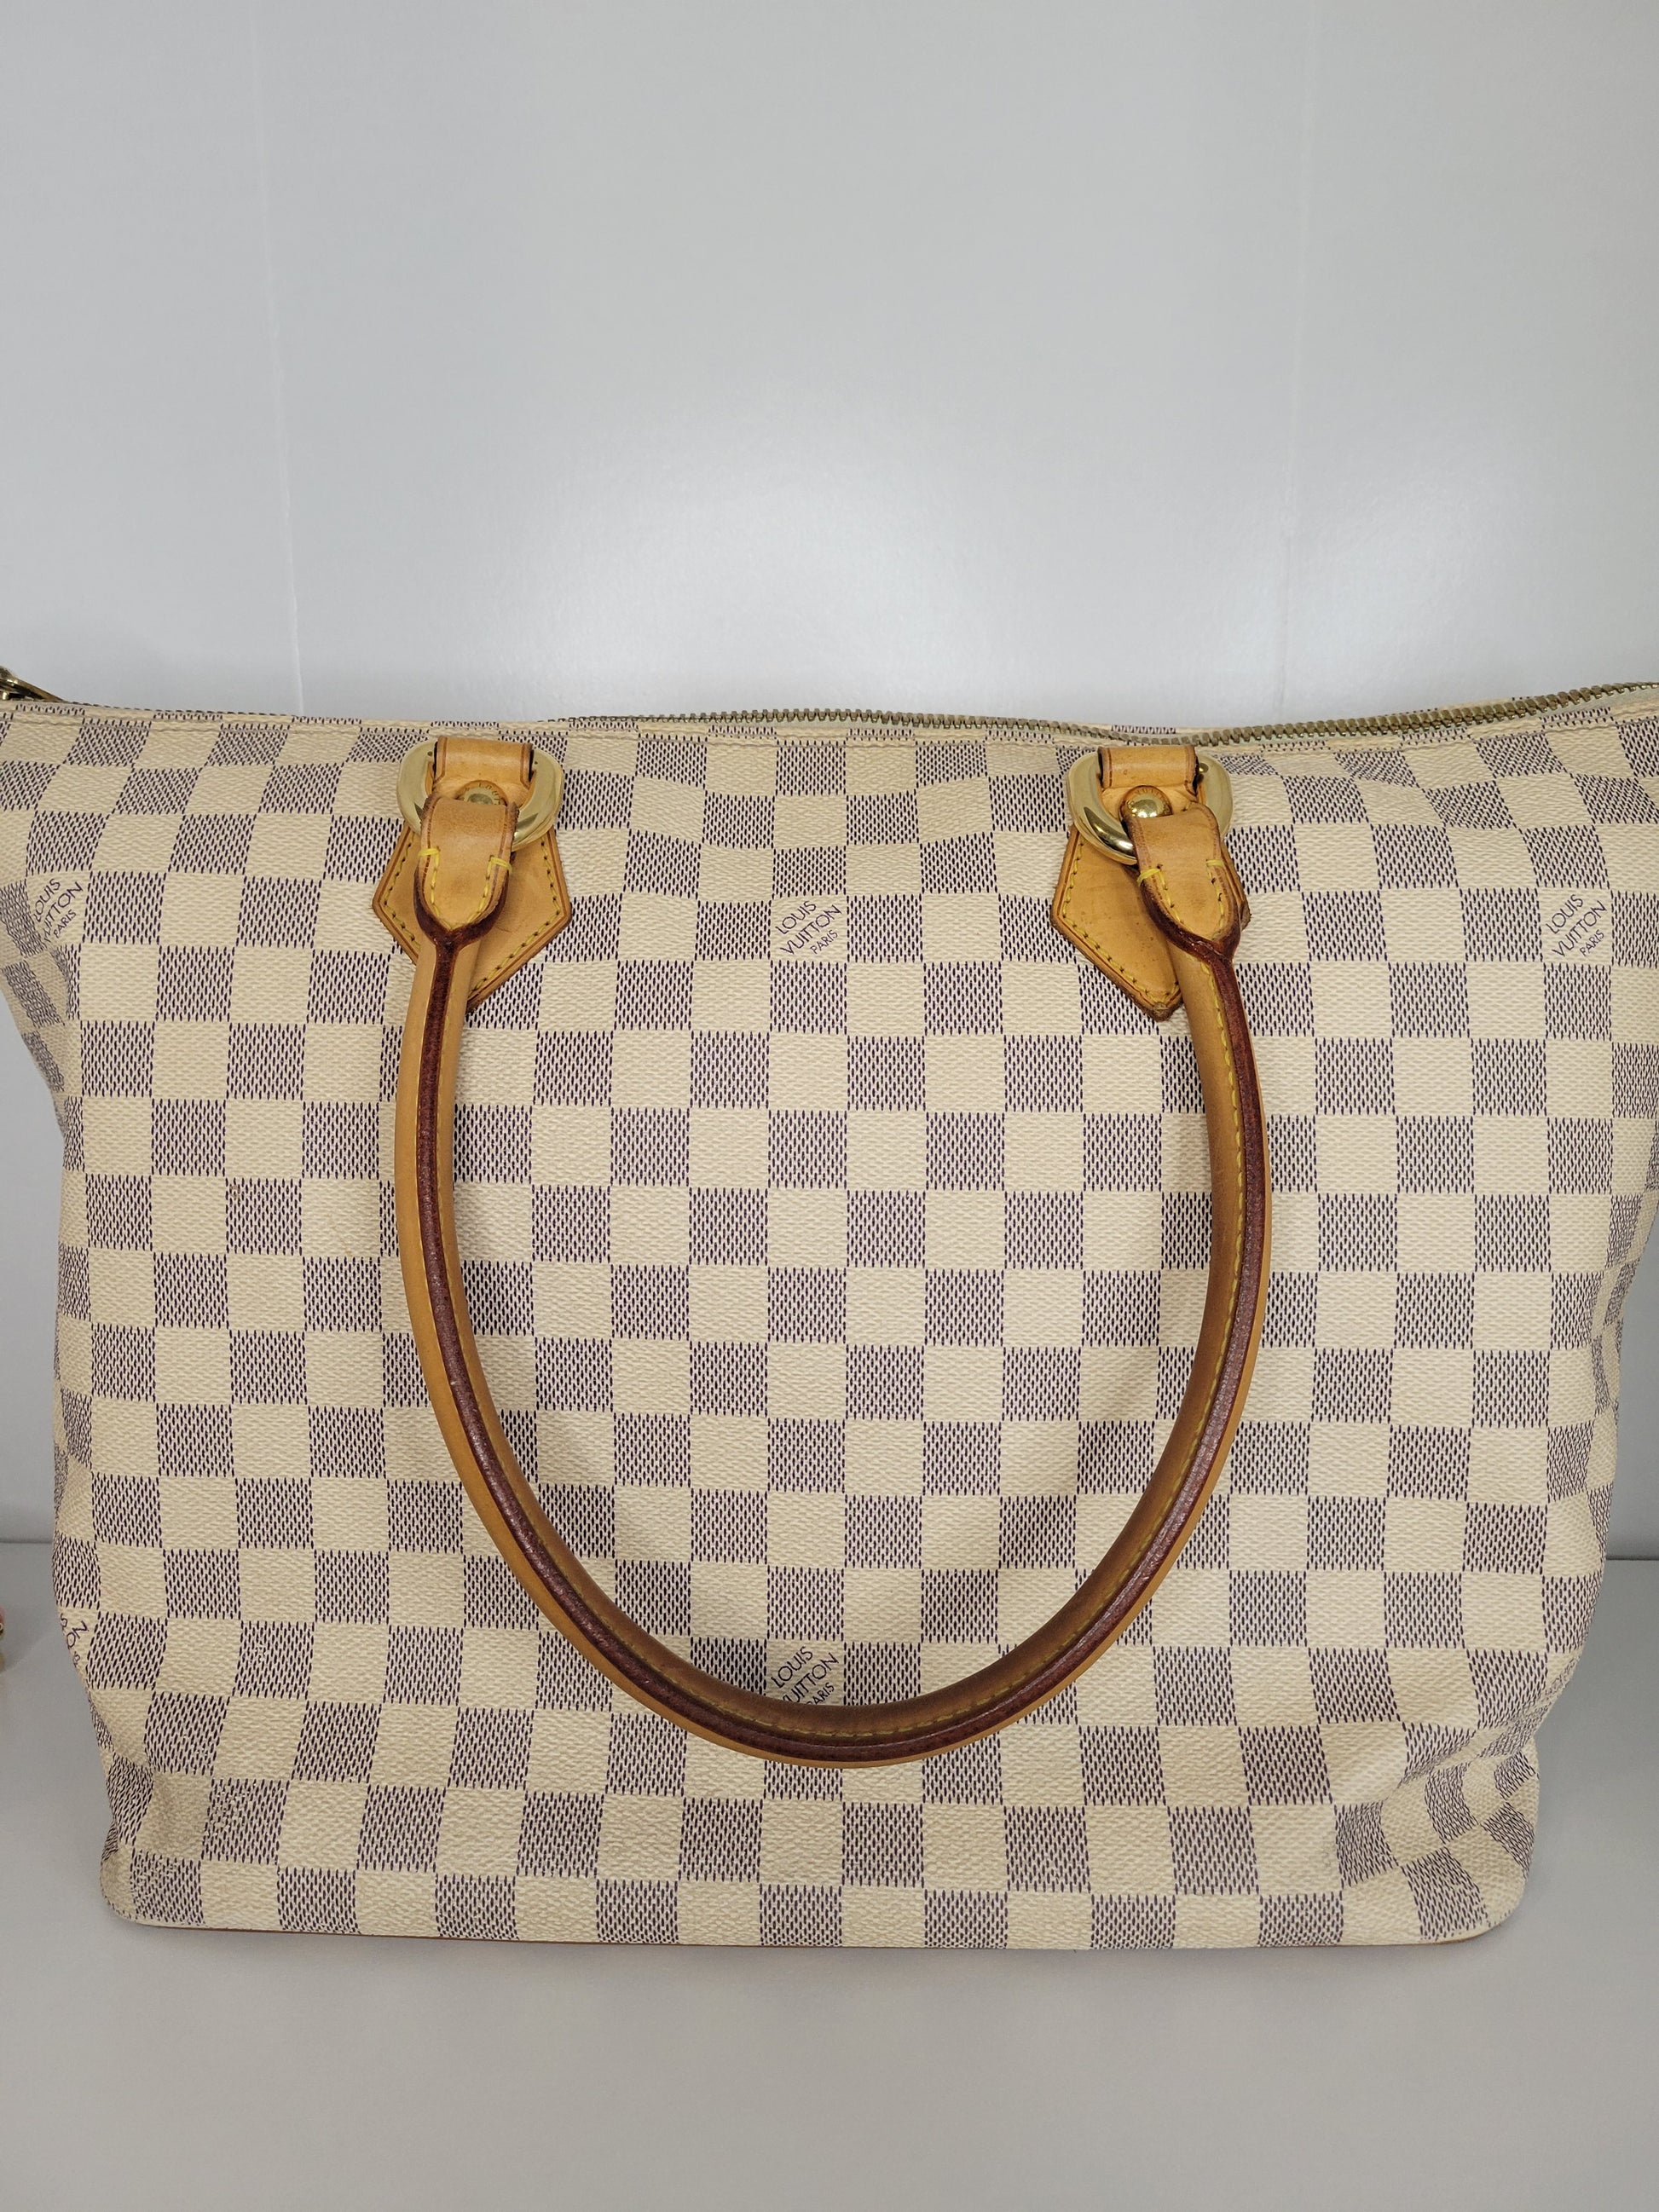 Louis Vuitton Damier Azur Saleya mm Zip Tote Bag 111lv20